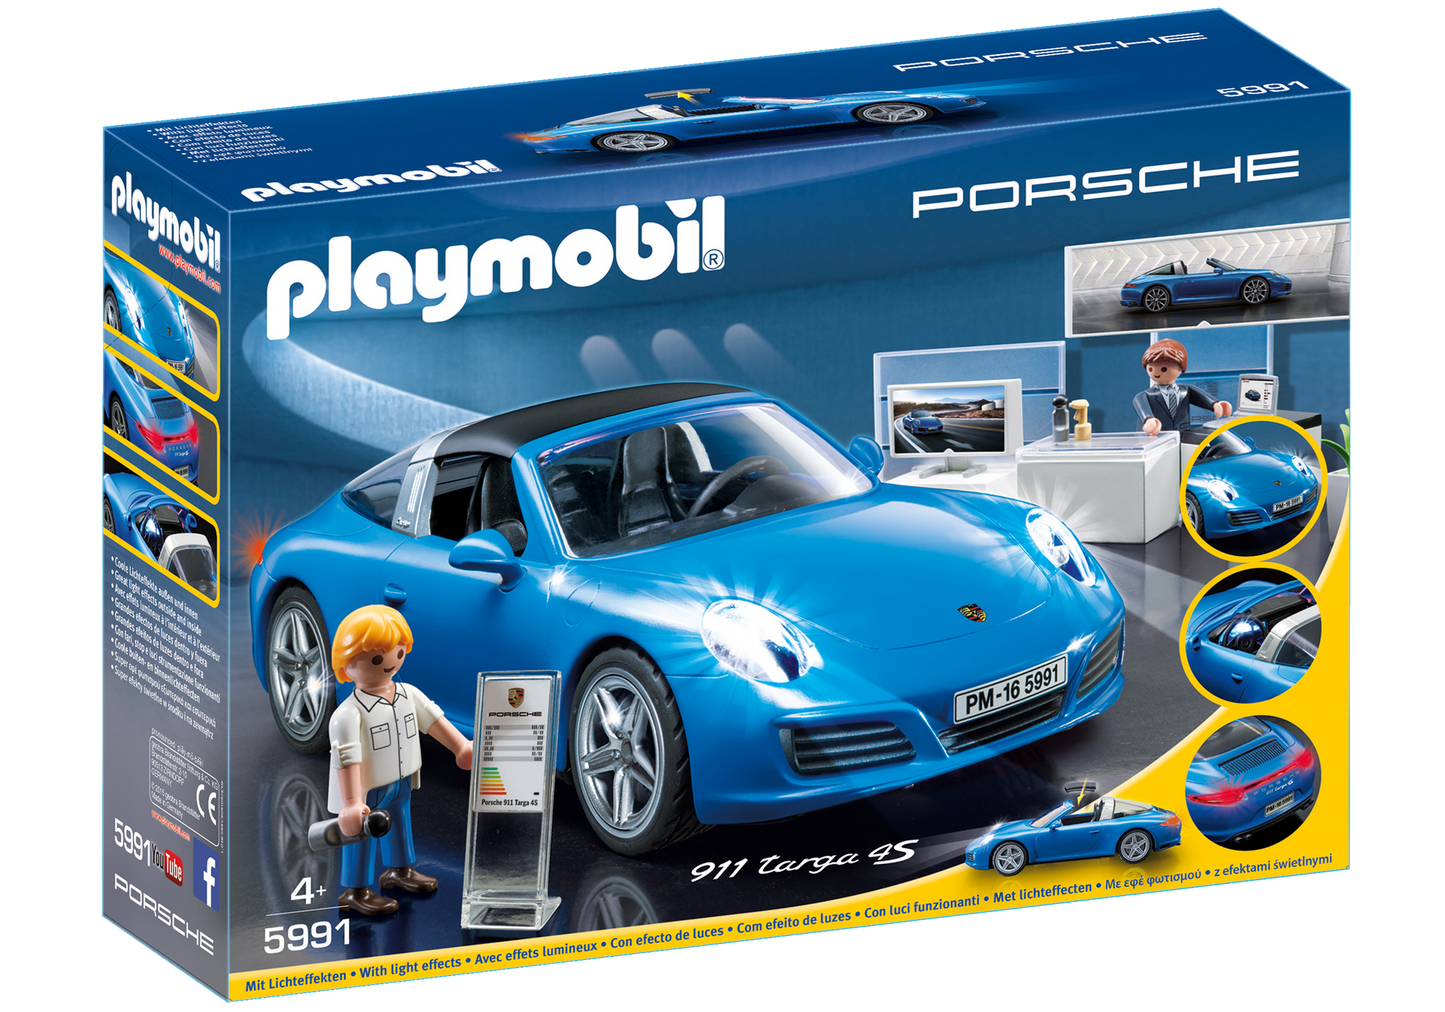 Playmobil Porsche 911 Targa 4S 5991